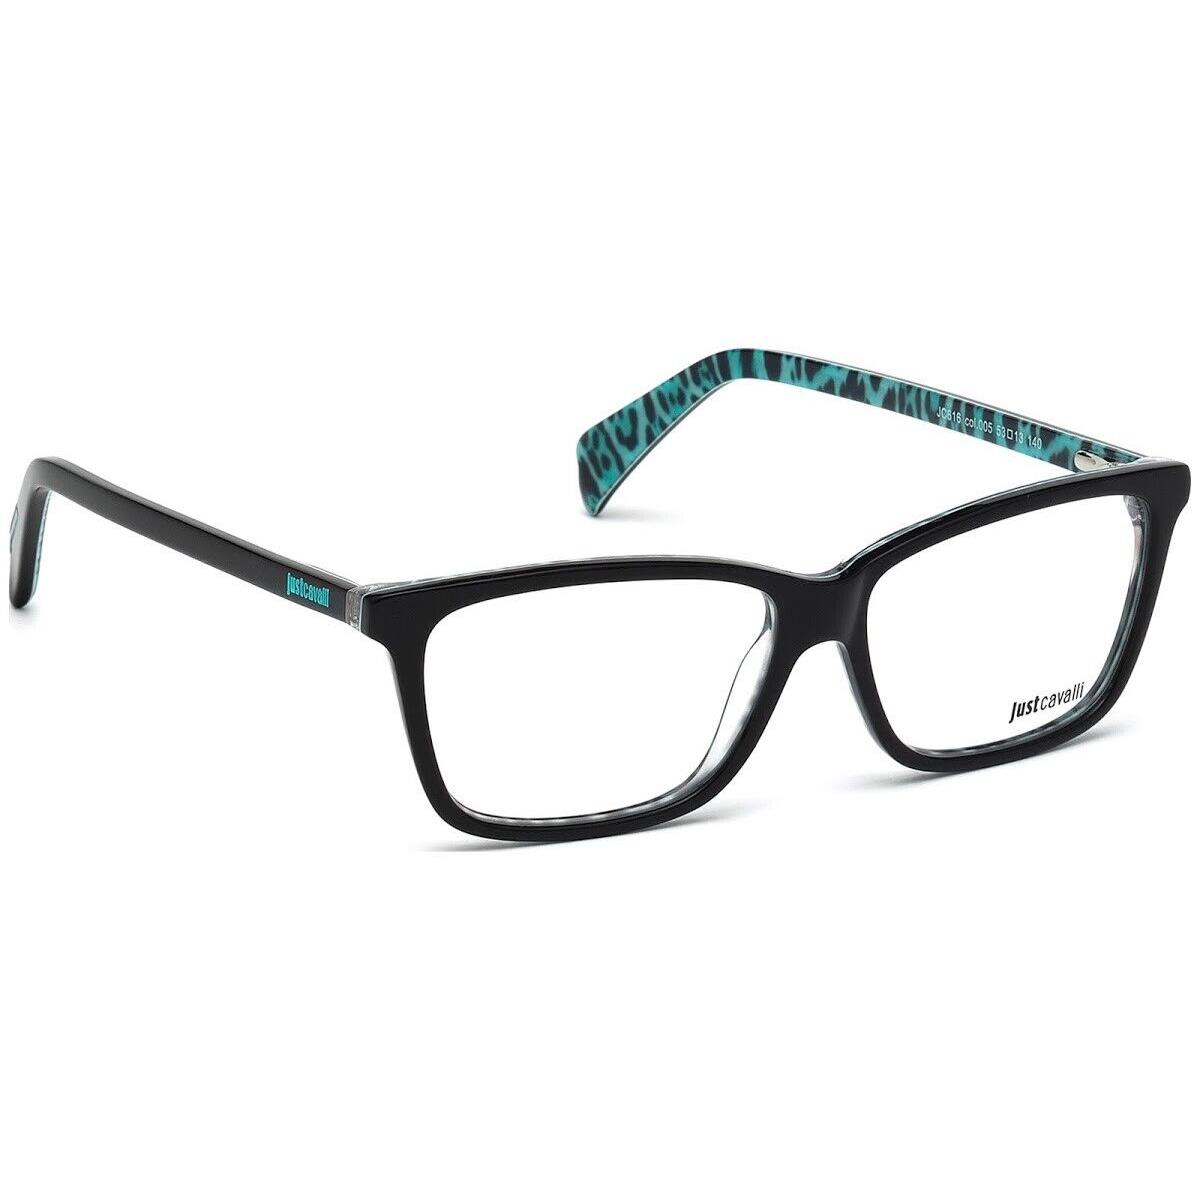 Just Cavalli JC616 005 Black Plastic Eyeglasses Frames 53-13-140 JC 616 RX